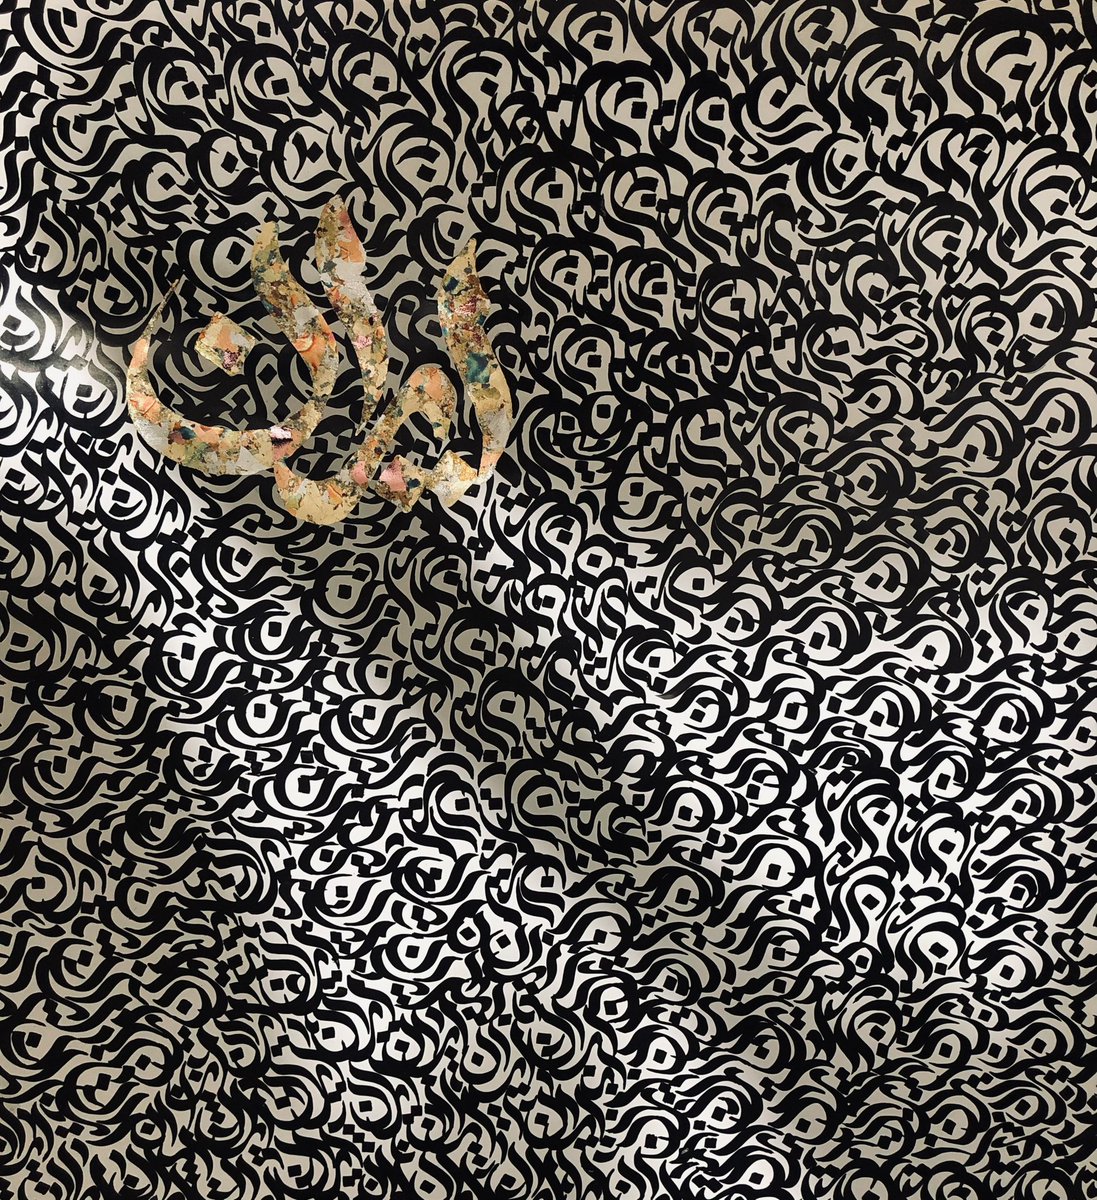 ⚫️black and white collection 
⚪️Iran 
⚫️3 editions are listed 
⚪️7 #TEZOS
⚫️on  @objktcom
⚪️⚫️LINK⚫️⚪️
objkt.com/tokens/KT1RK8n…
⚫️⚪️⚫️
#Iran #art #artist #parastookhalili #NFTsale #NFTartist #persiancalligraphy #parastookhalili #artwork #artstyle #calligraphy